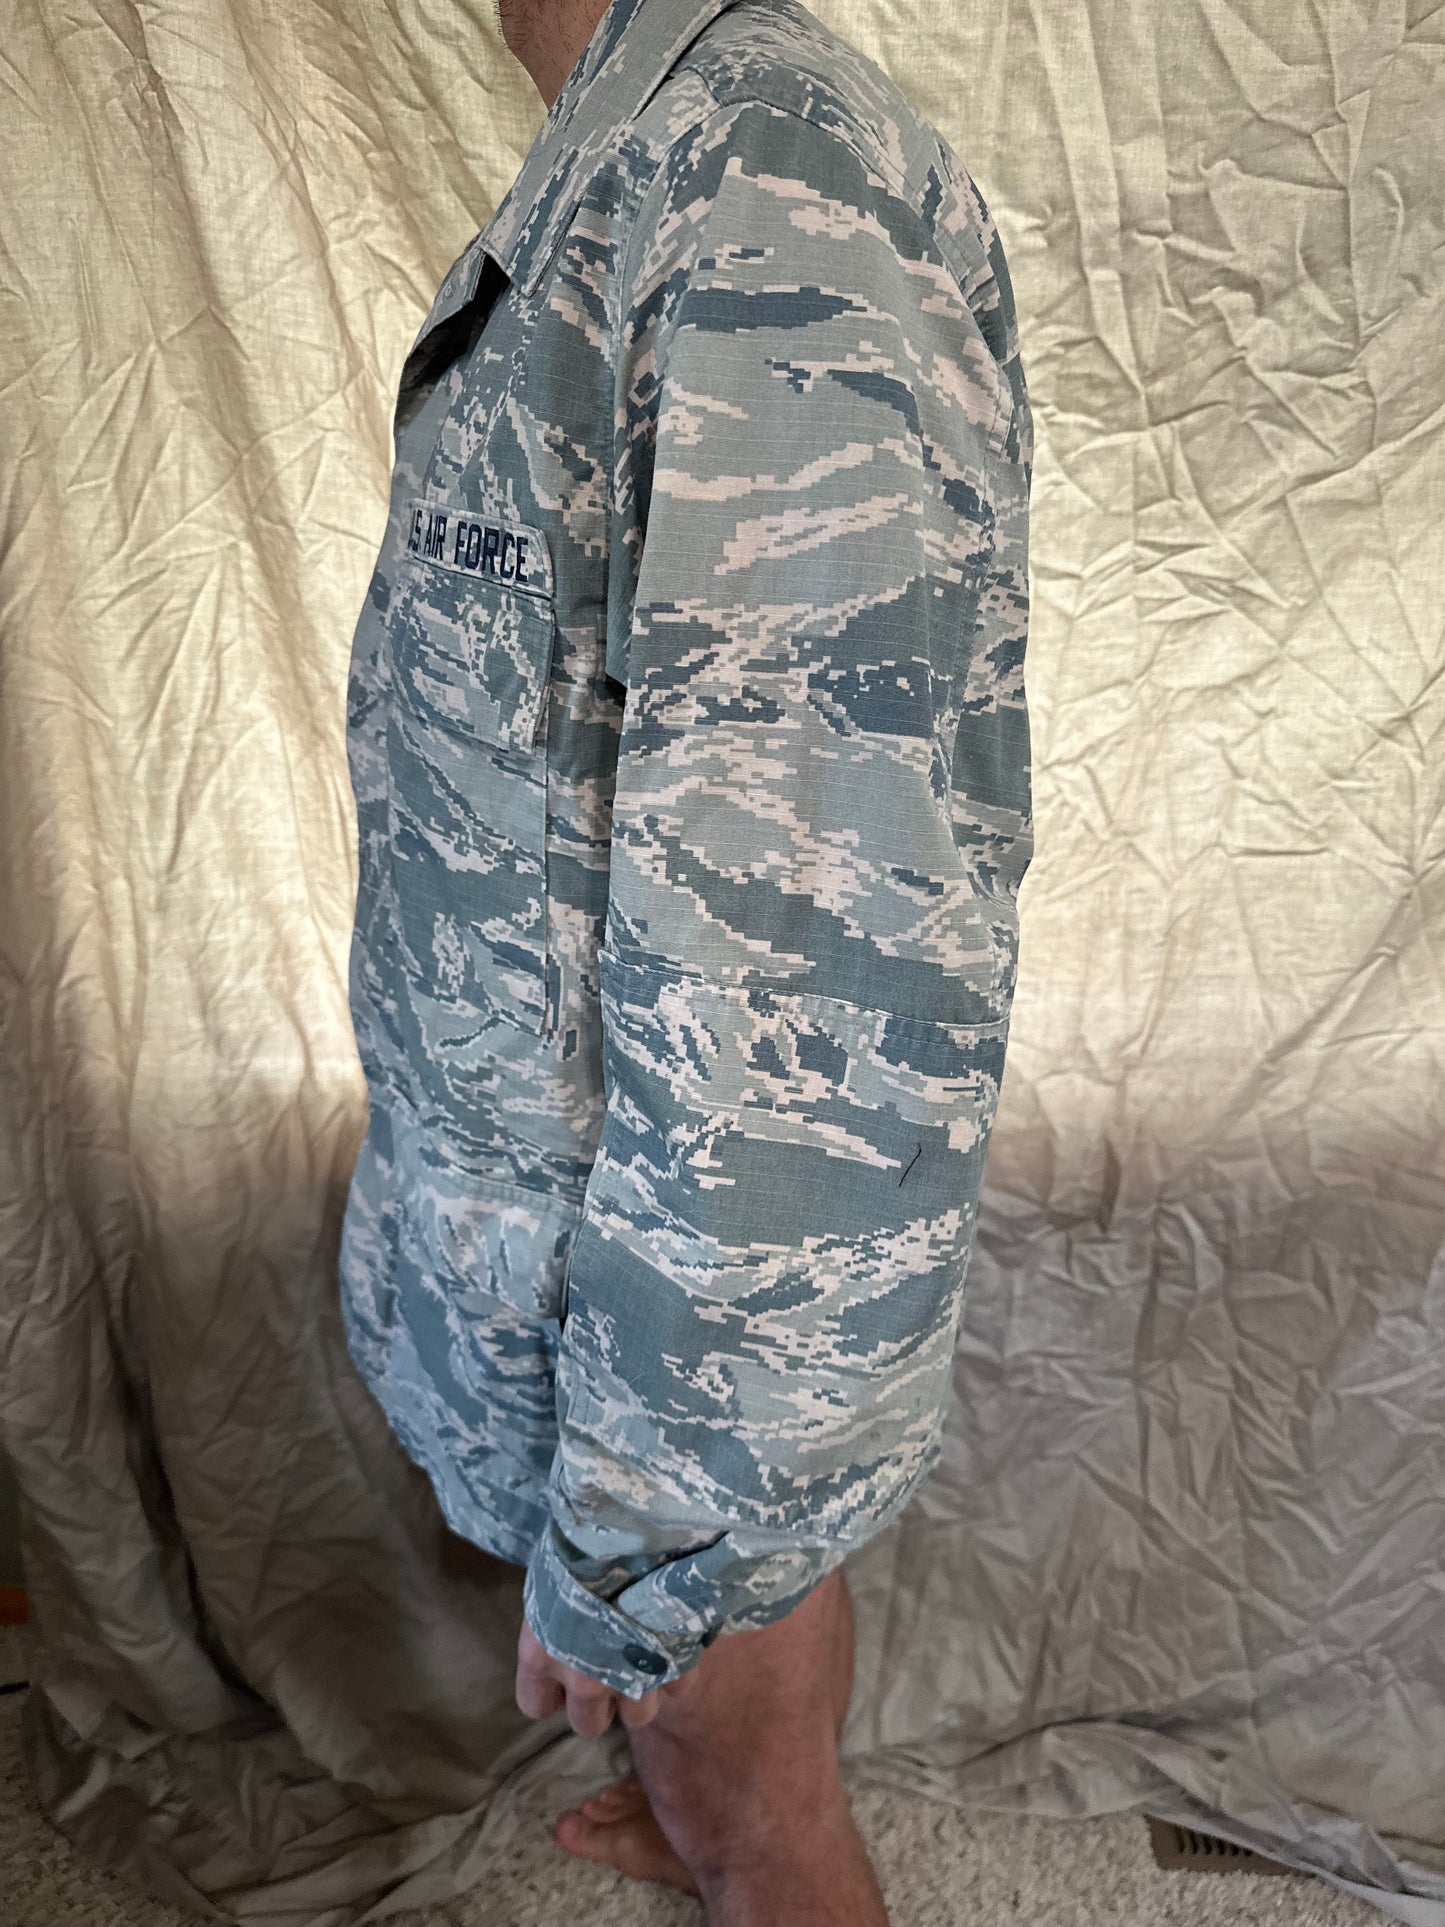 40R airman battle uniform Abu coat top civil air patrol blouse